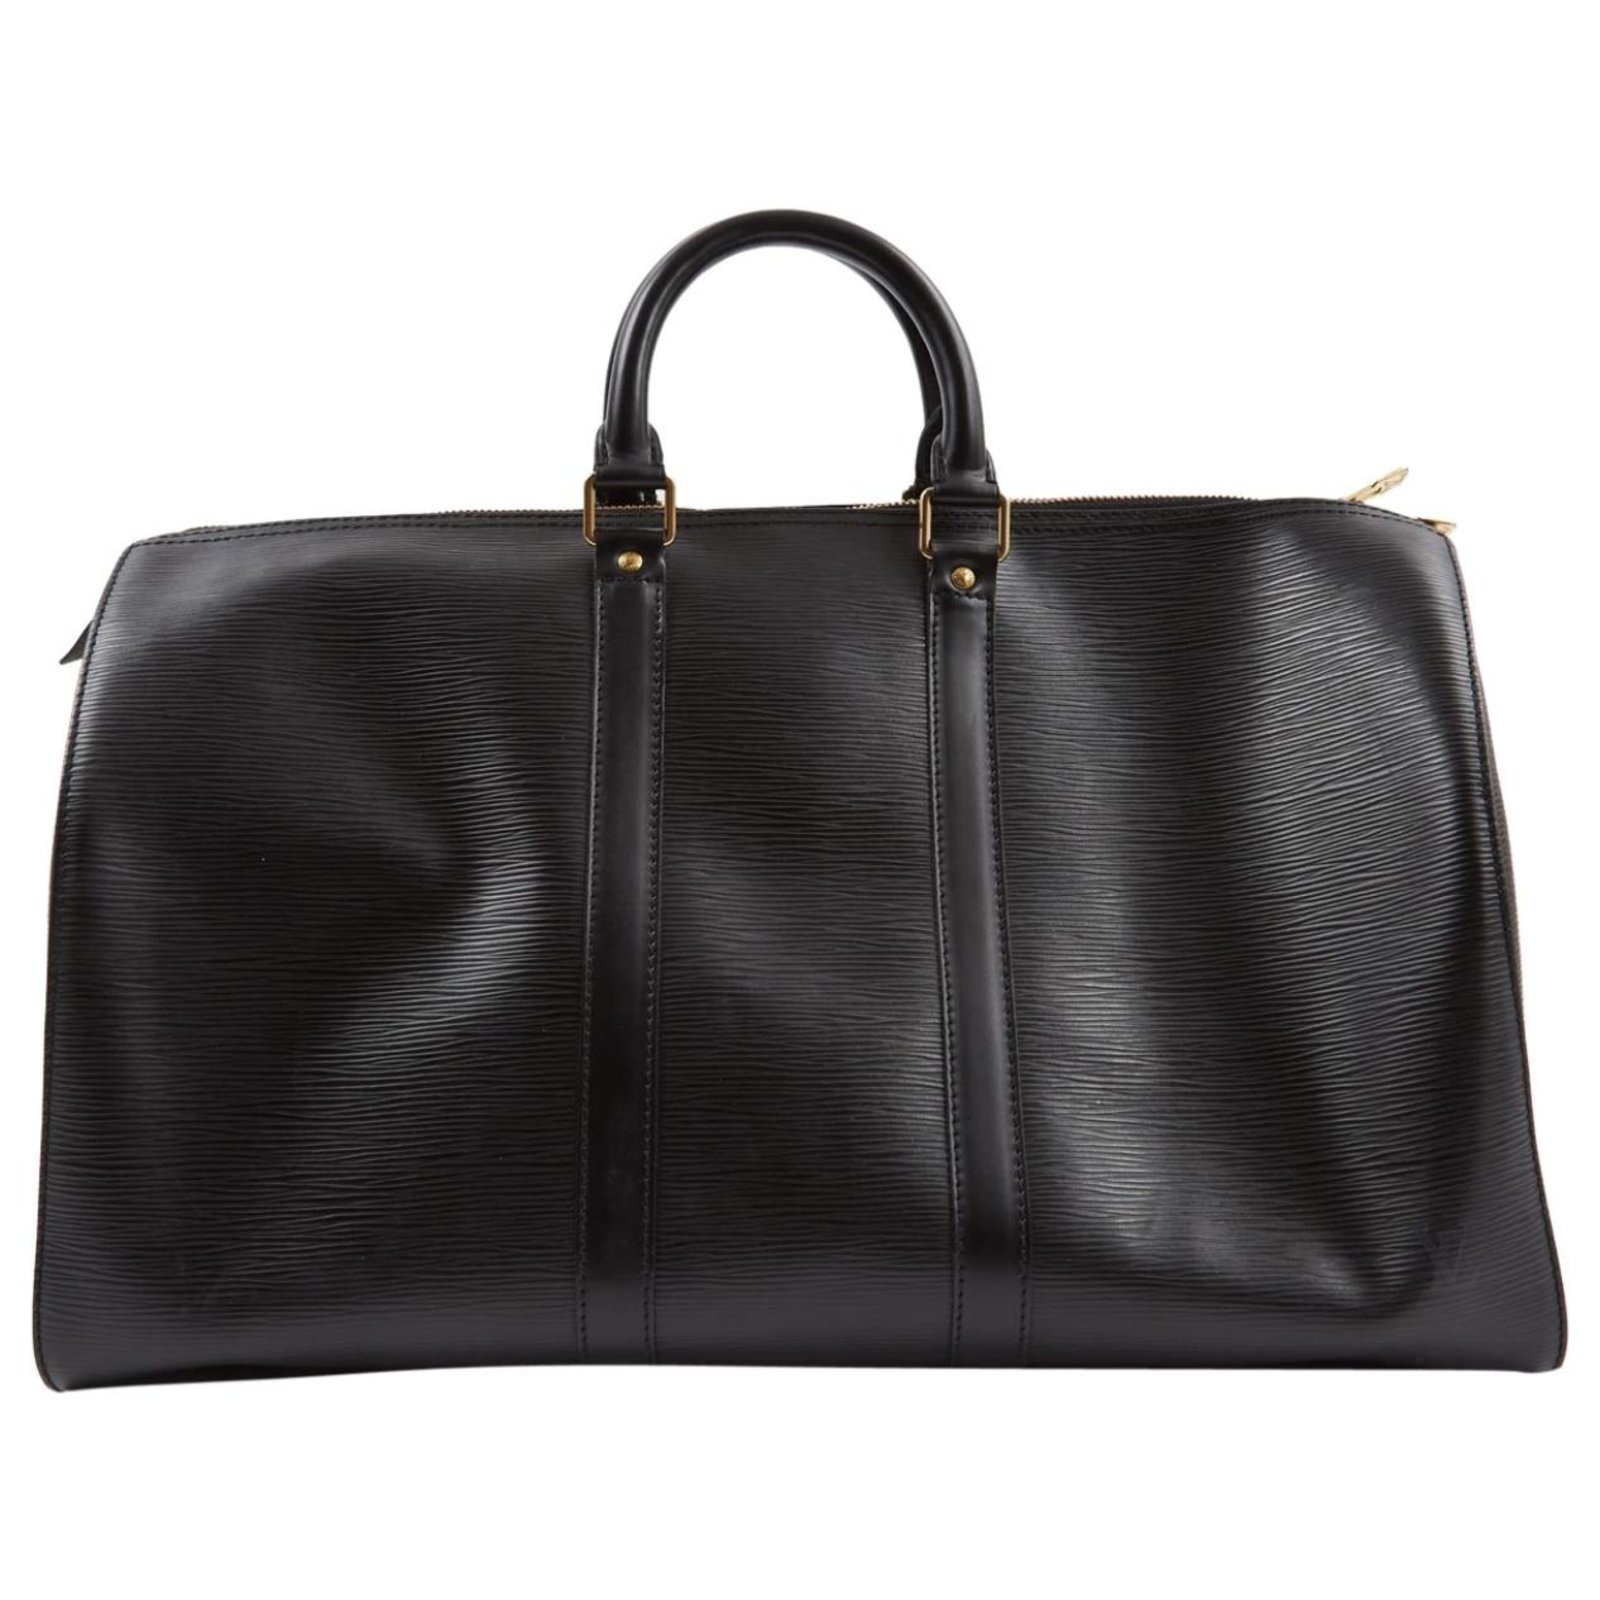 Louis Vuitton Keepall travel bag 45 in black epi leather -101107